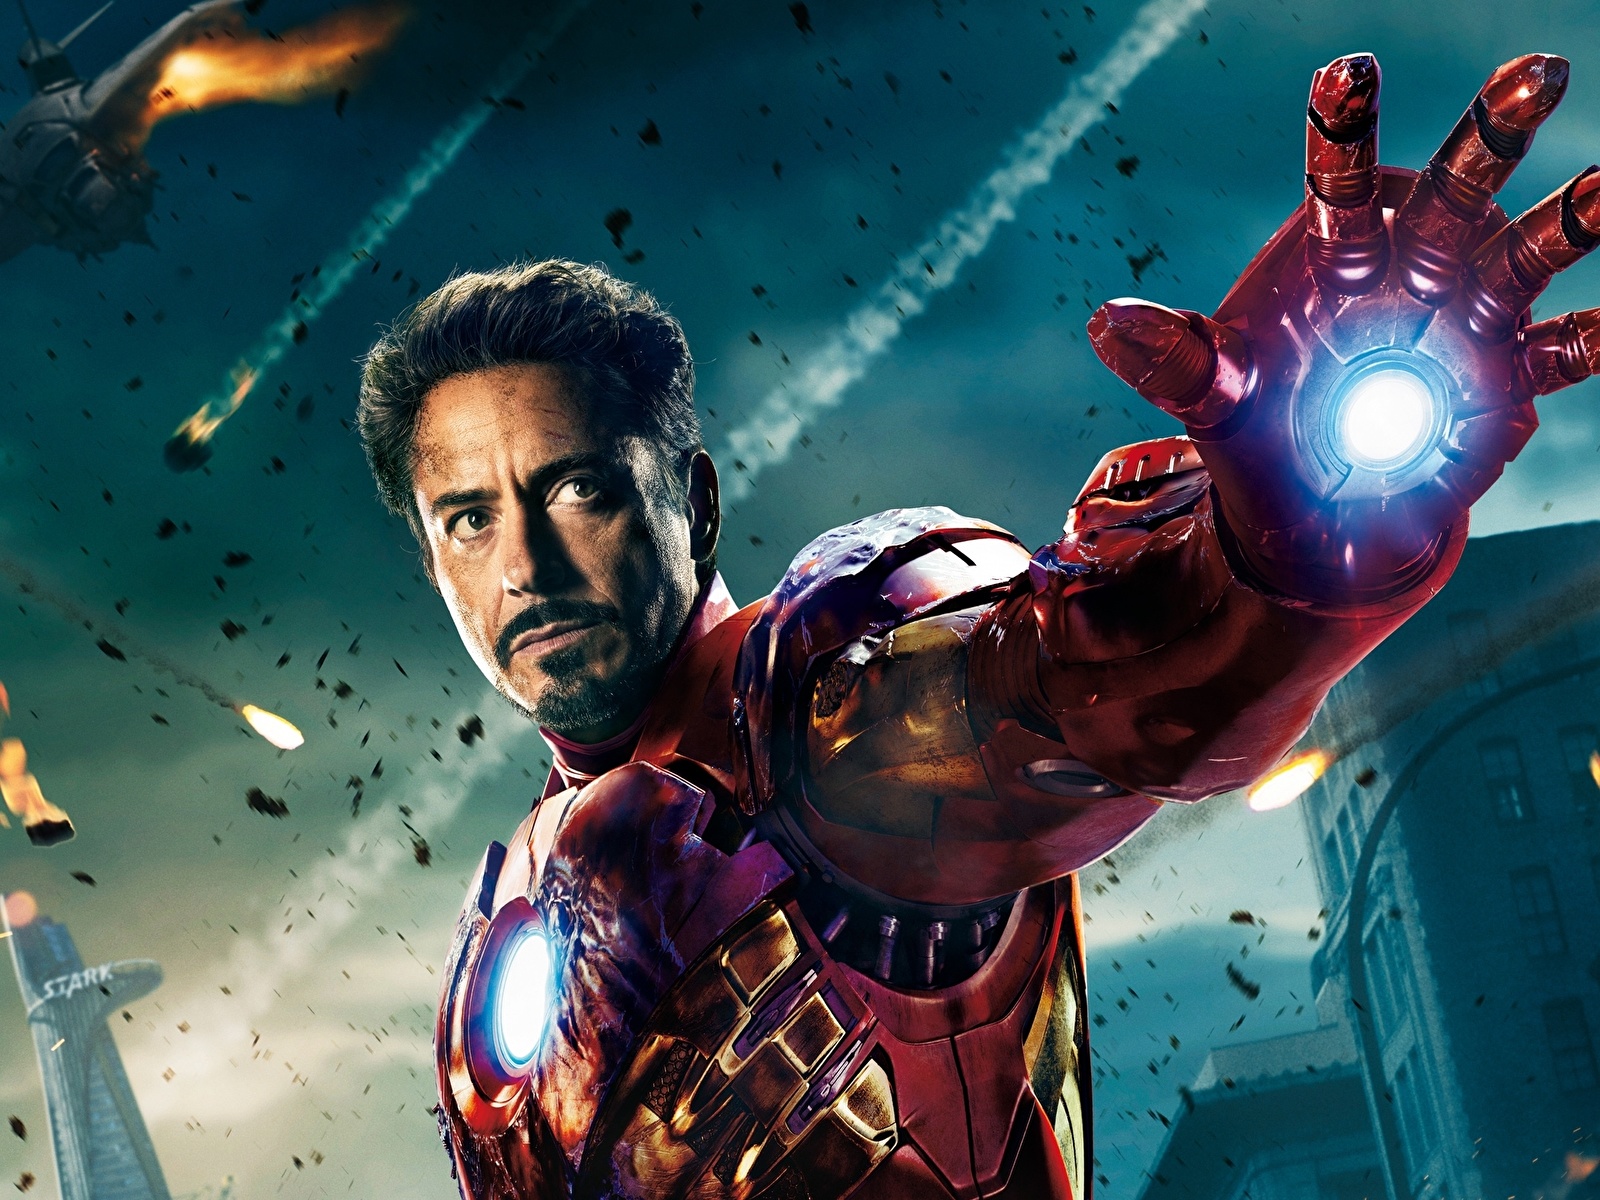 Images The Avengers (2012 film) Robert Downey Jr Iron Man hero film 1600x1200 Movies